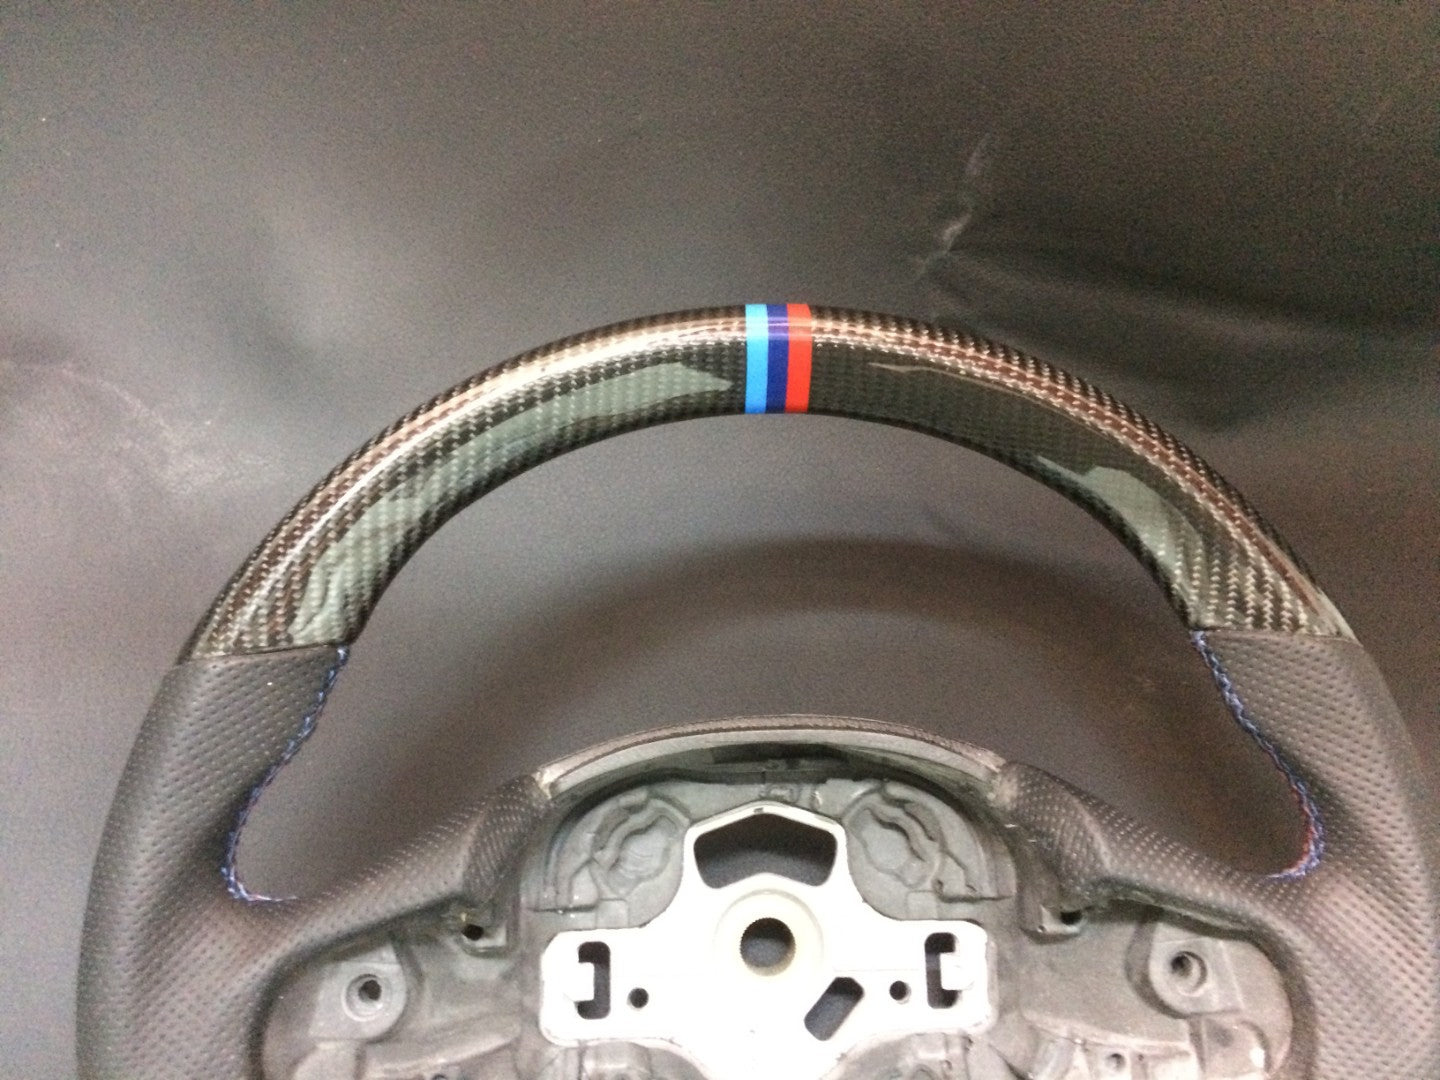 BMW F30 F31 F15 F16 steering wheel carbon leather 12 o'clock stripes